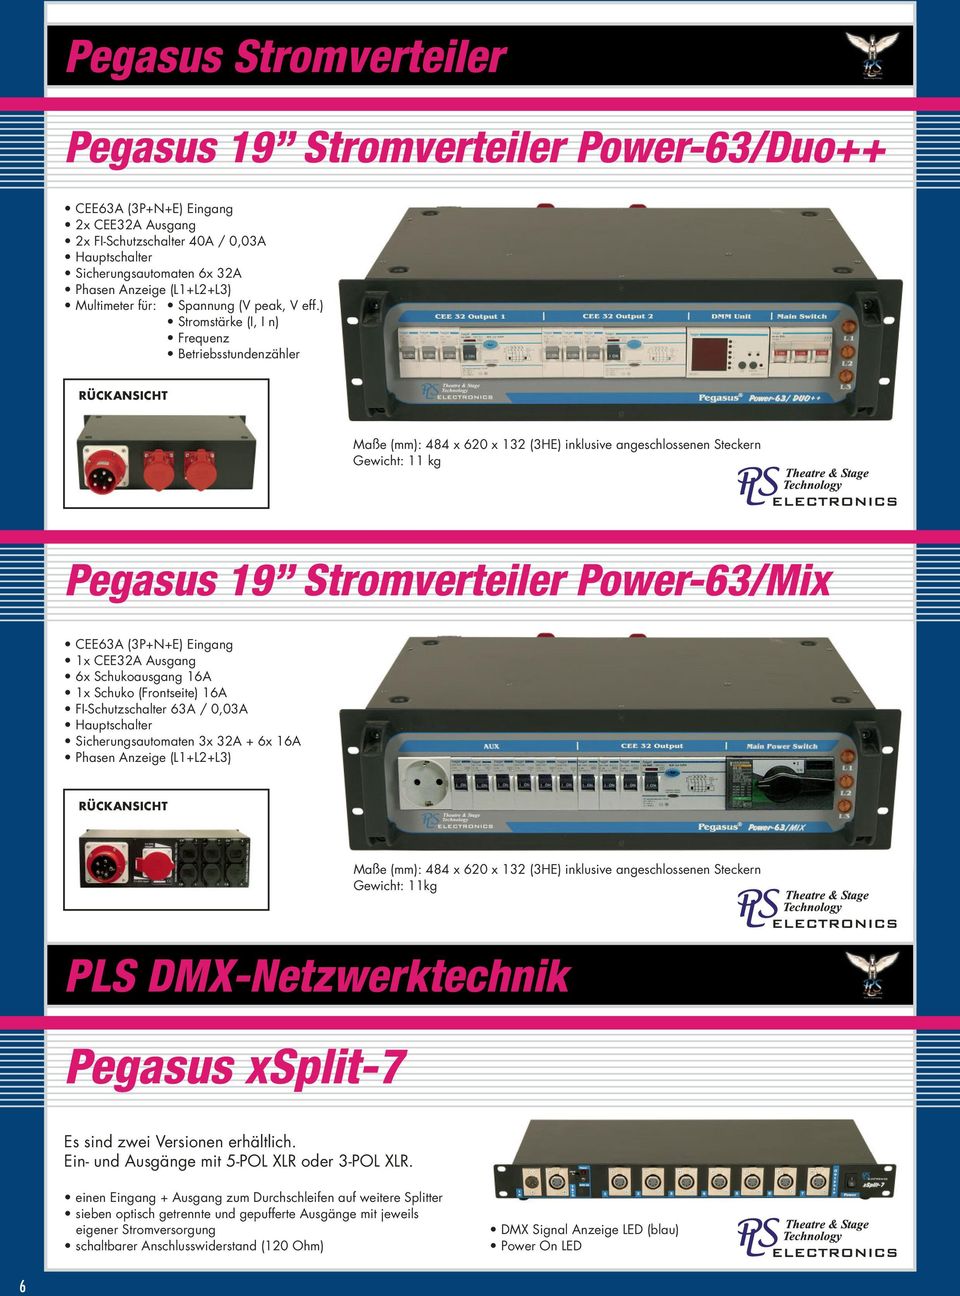 ) Stromstärke (I, I n) Frequenz Betriebsstundenzähler RÜCKANSICHT Maße (mm): 484 x 620 x 132 (3HE) inklusive angeschlossenen Steckern Gewicht: 11 kg Pegasus 19 Stromverteiler Power-63/Mix CEE63A